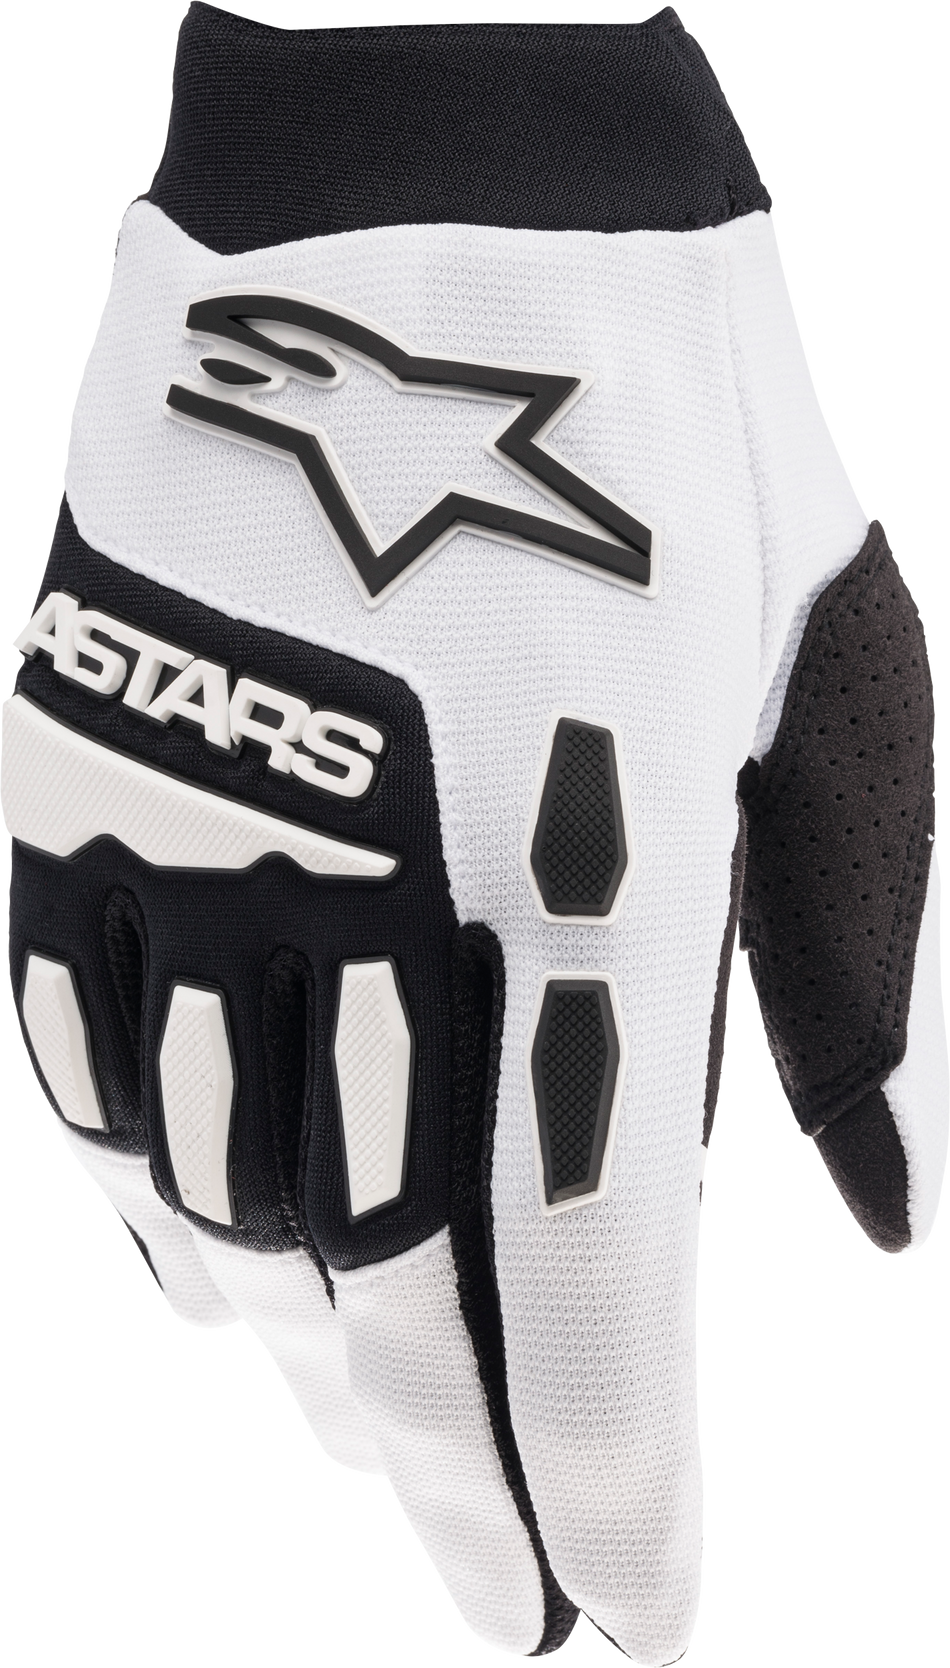 ALPINESTARS Youth Full Bore Gloves White/Black Yxs 3543622-21-XS